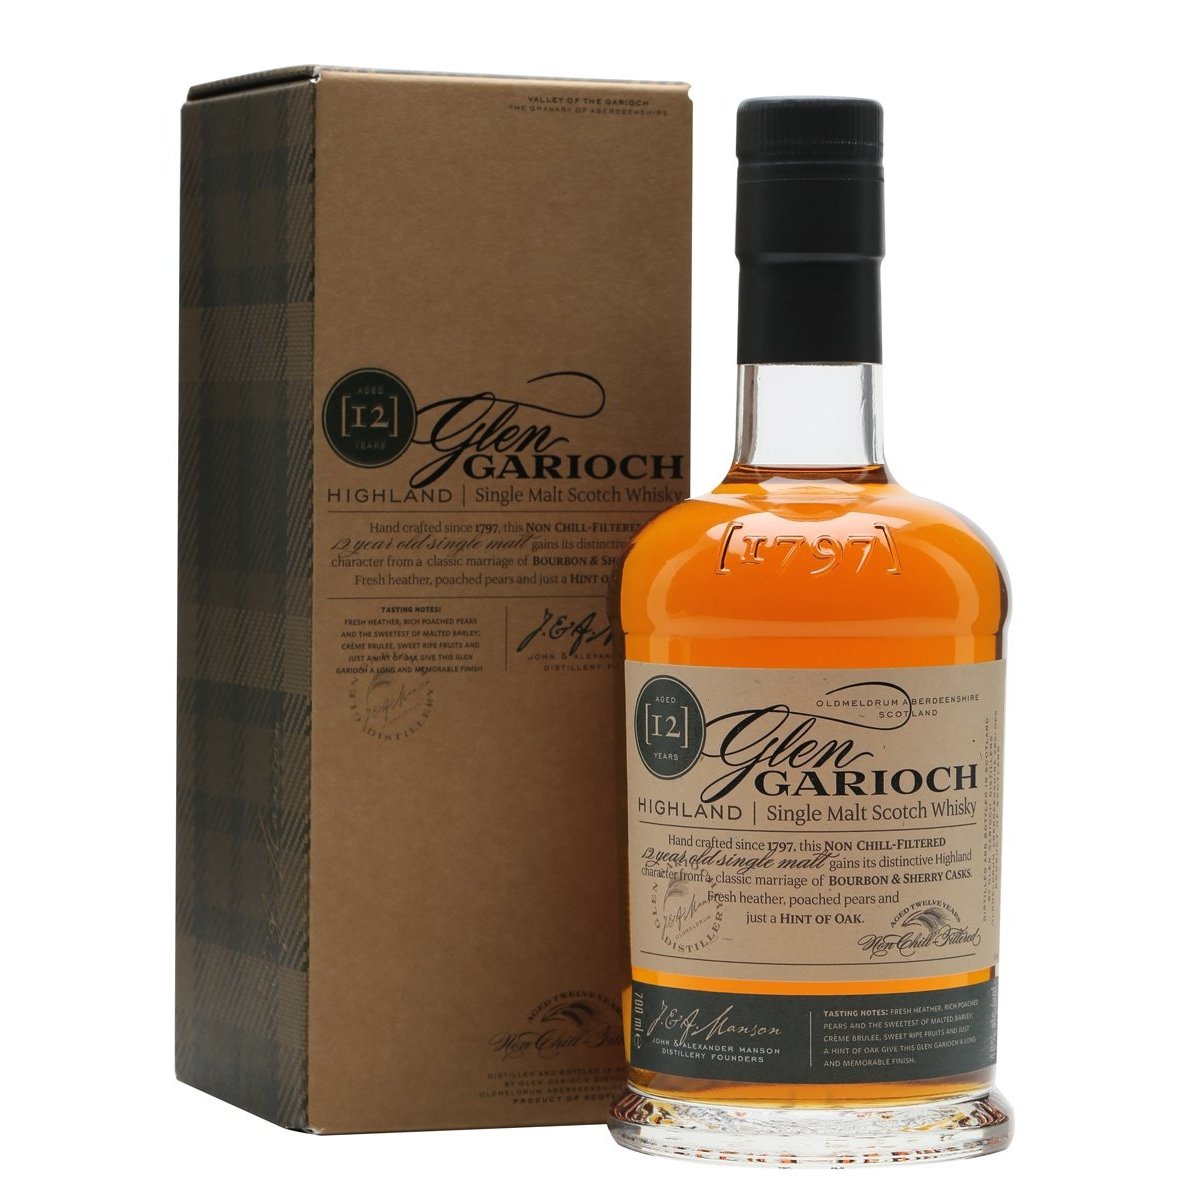 Glen Garioch 12 Years Old Highland Single Malt Scotch Whisky 48% Vol. 1l in Giftbox